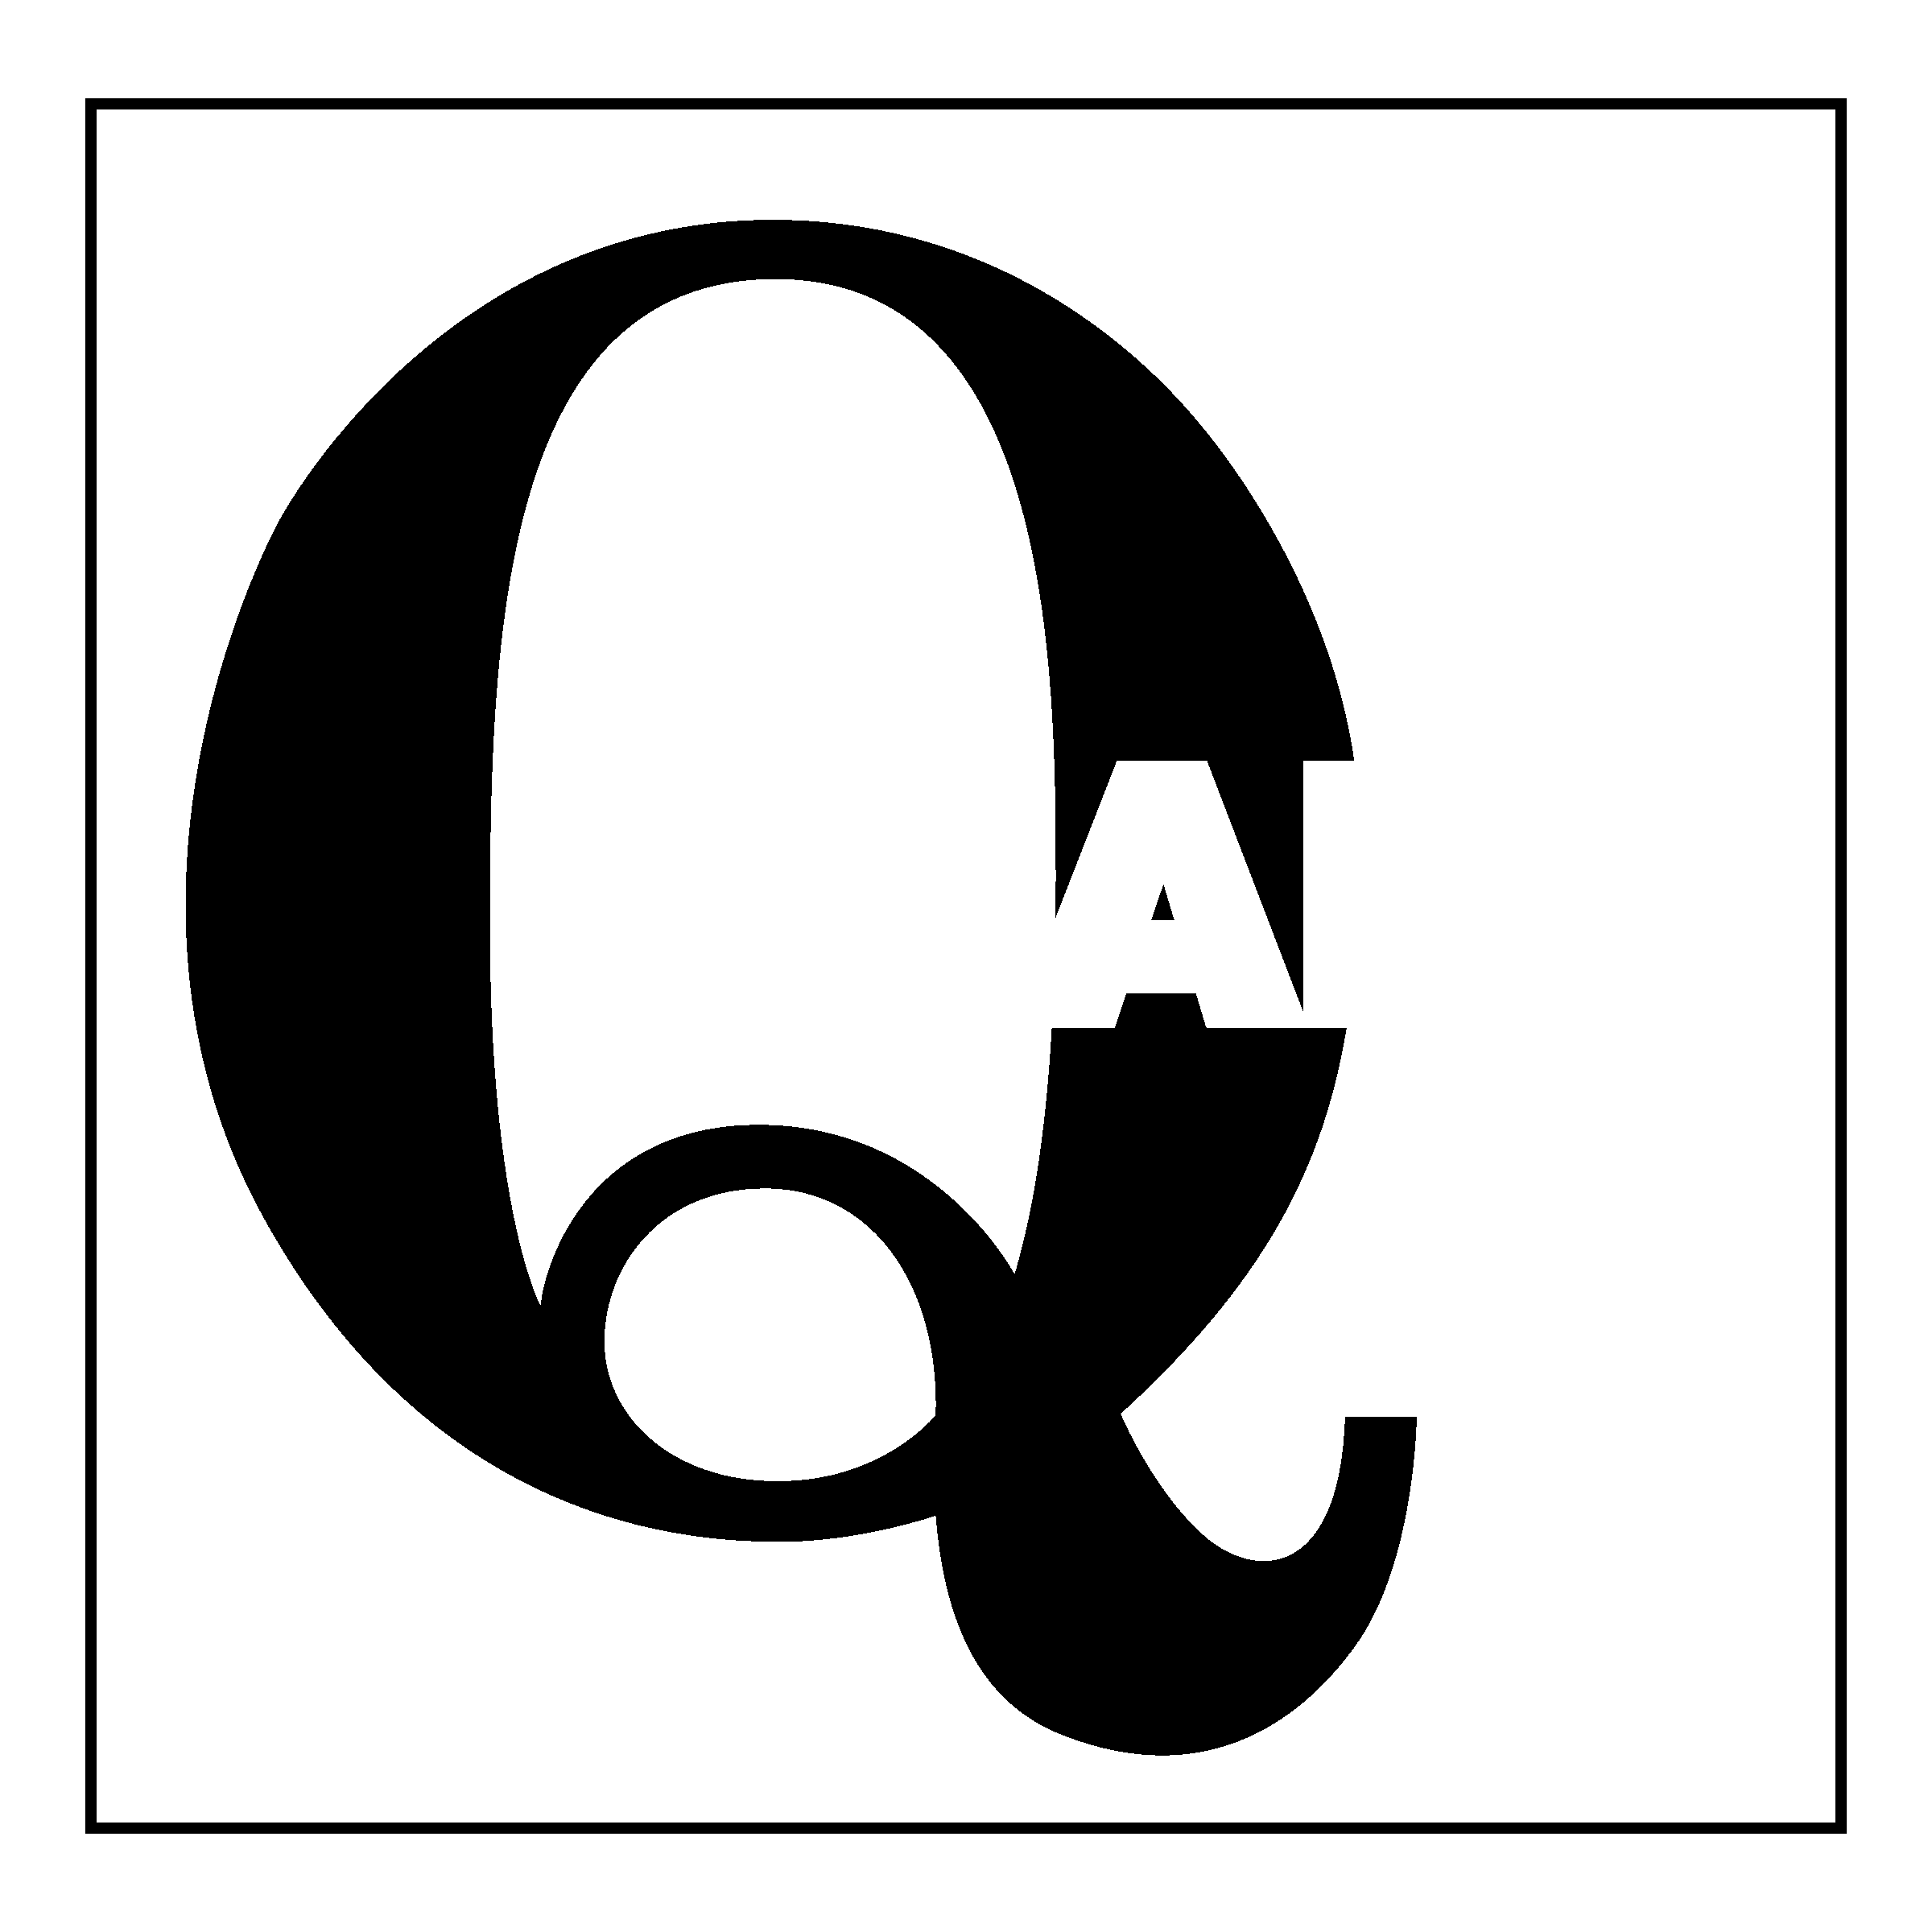 Q Mart Logo - Qmart Logo PNG Transparent & SVG Vector - Freebie Supply